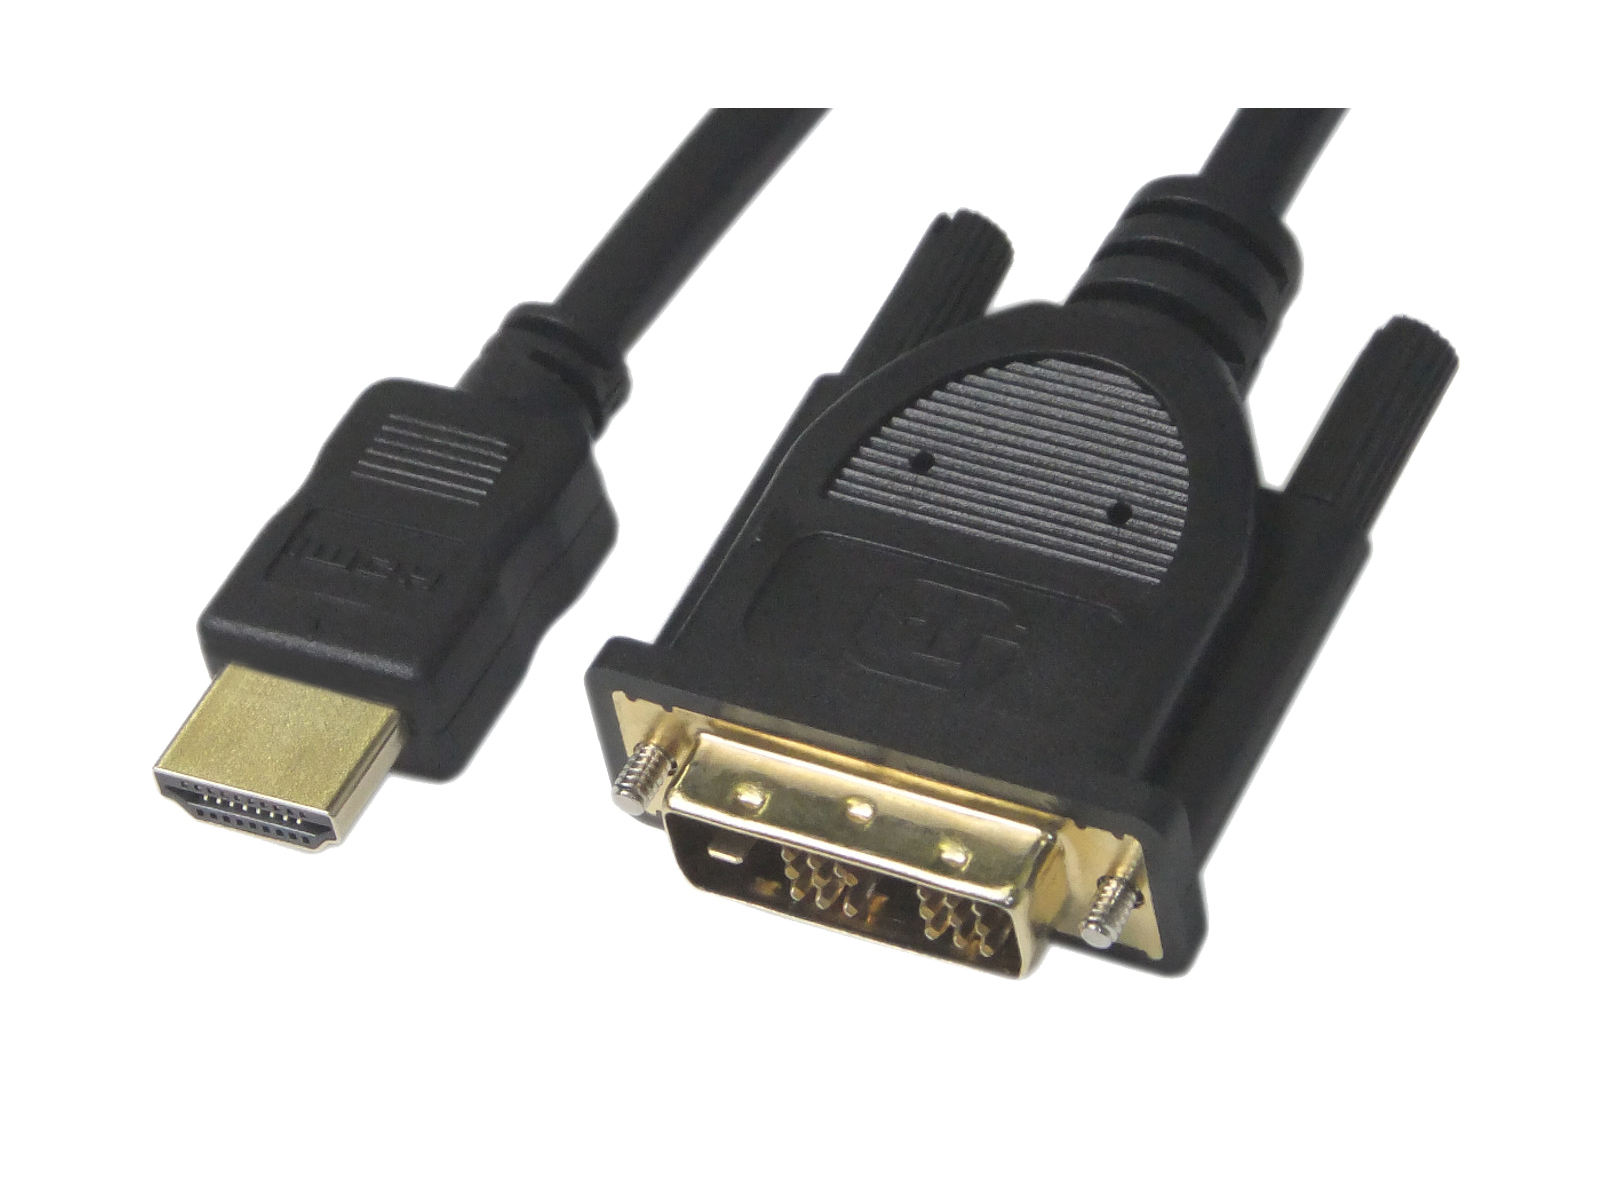 vodaview 超特価SALE開催 豊富な品 HDMI-DVI 変換ケーブル2.0m DVI⇔HDMI 送料無料 両方向対応 〔黒〕〔全結線仕様〕 メール便